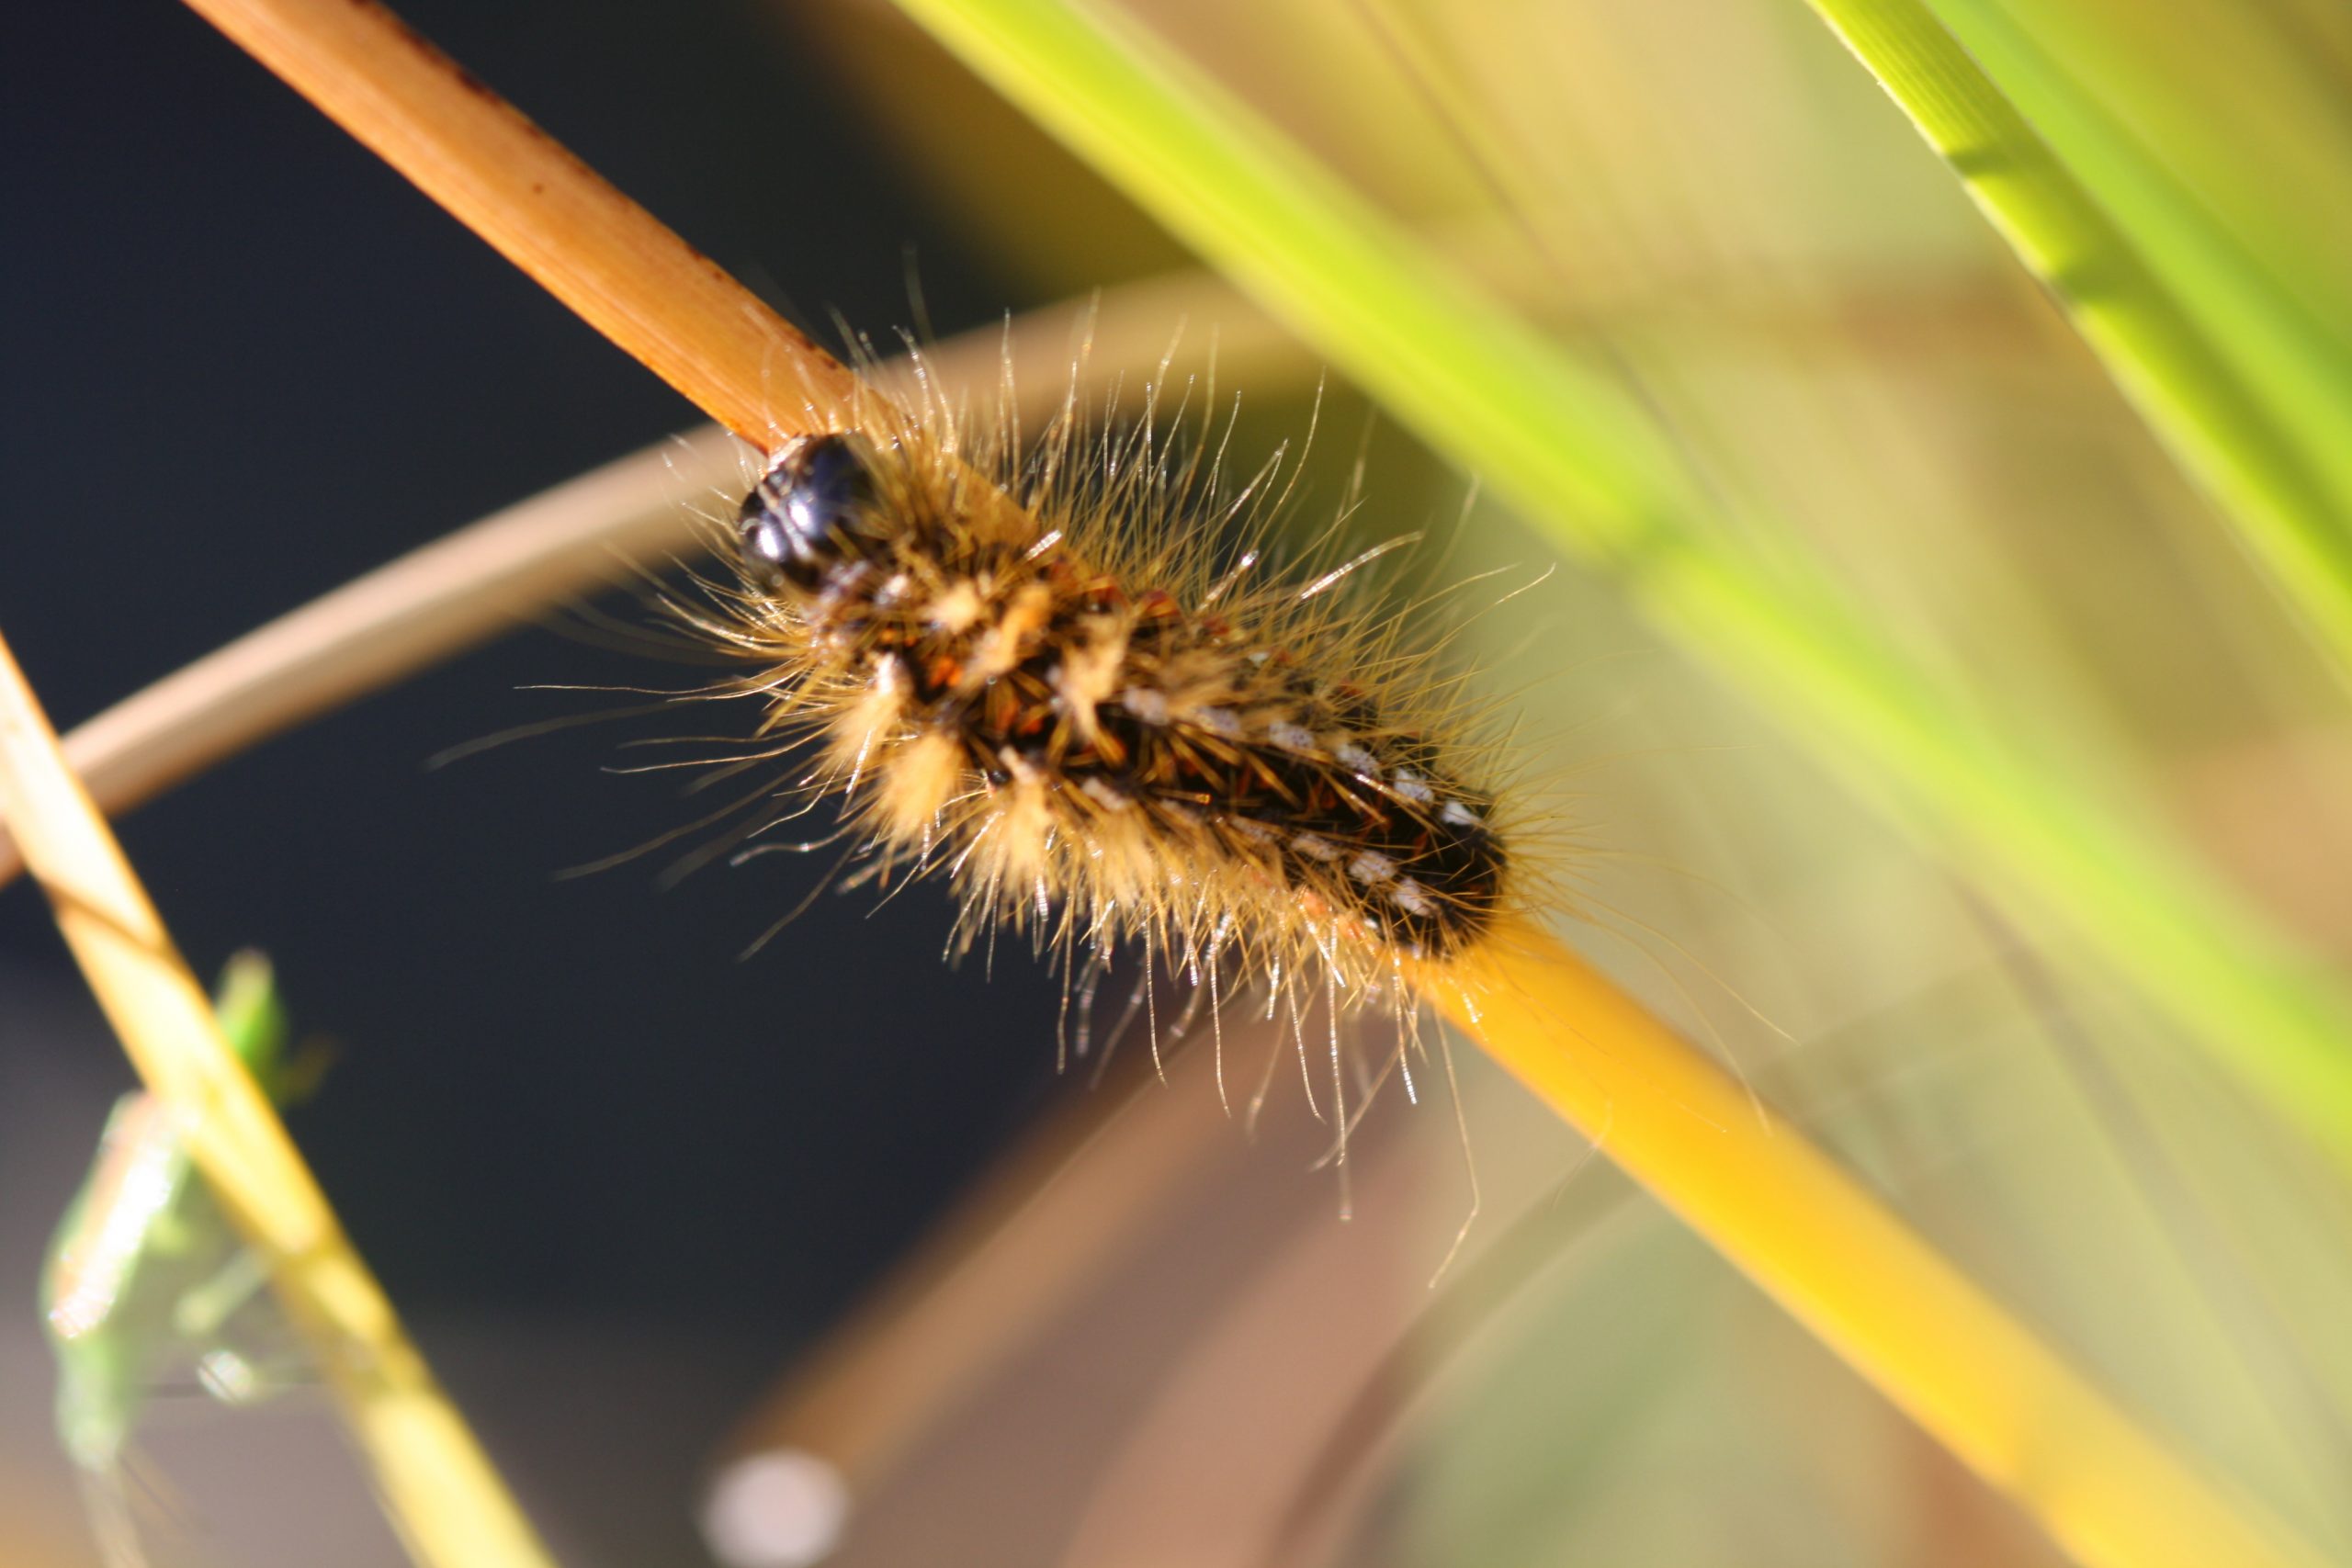 Brown tailed moth caterpillar, Euproctis chrysorrhorrhoea